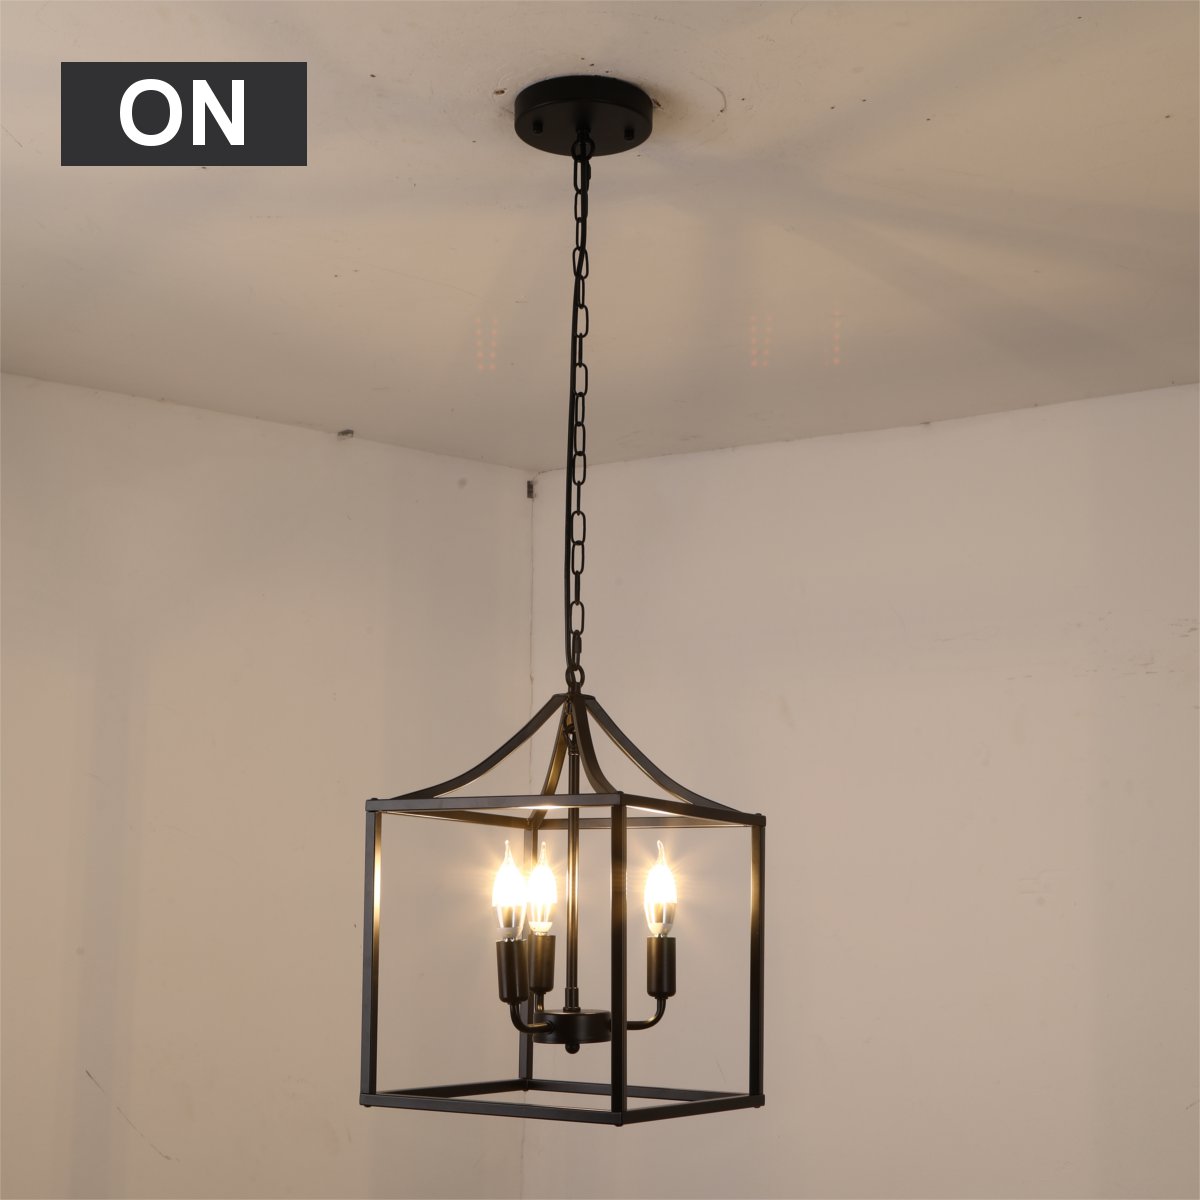 3-Heads-E12-Pendant-Light-Ceiling-Lamp-Hallway-Bedroom-Home-Bar-Fixture-Decor-1794840-6